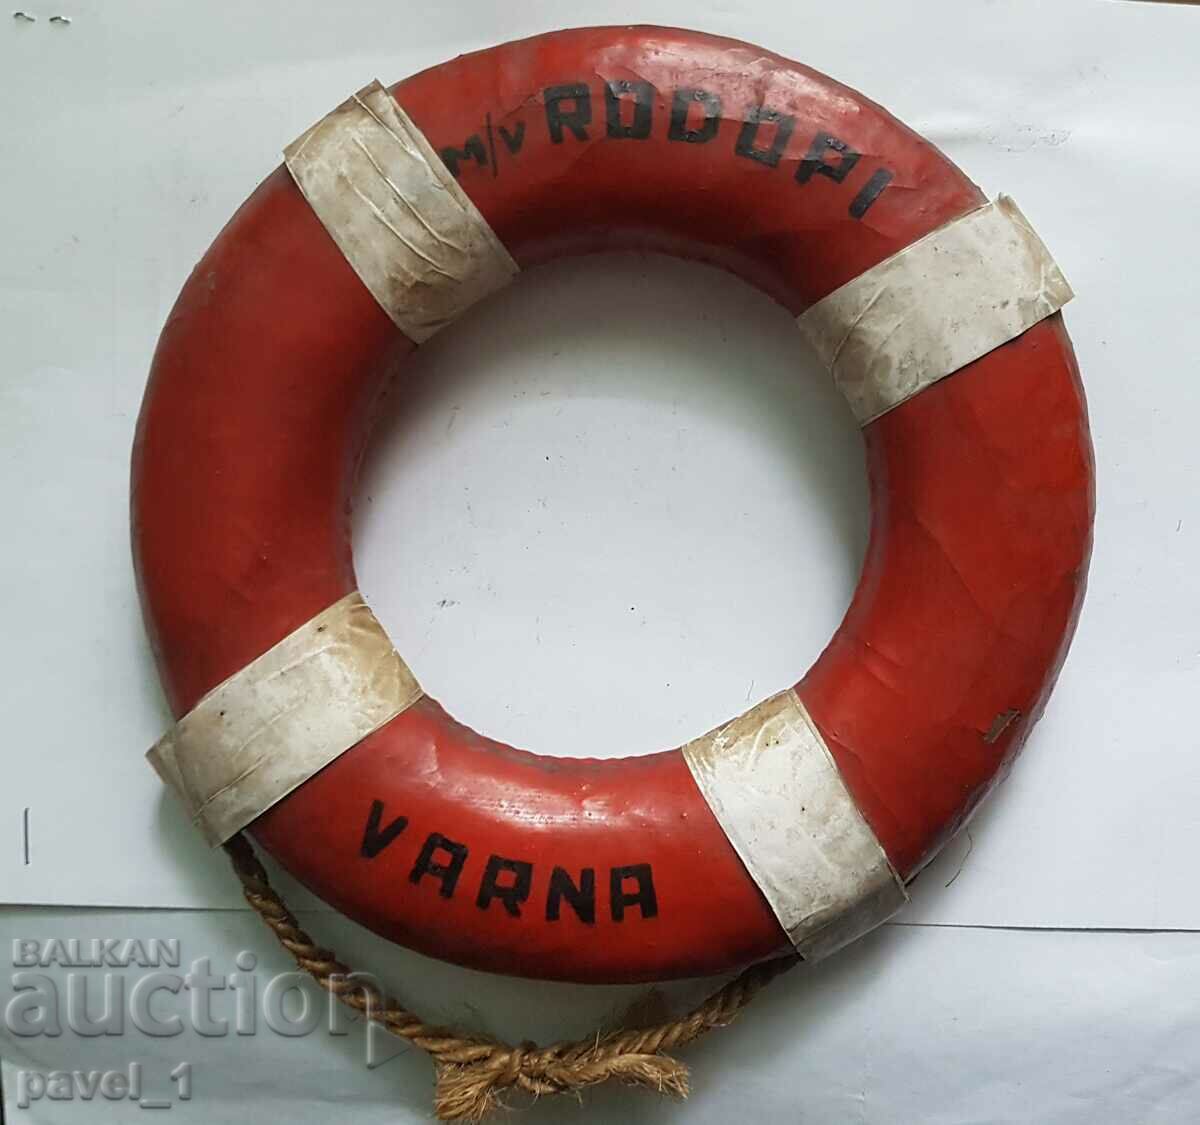 Rescue belt-souvenir of M/C "Rodopi"